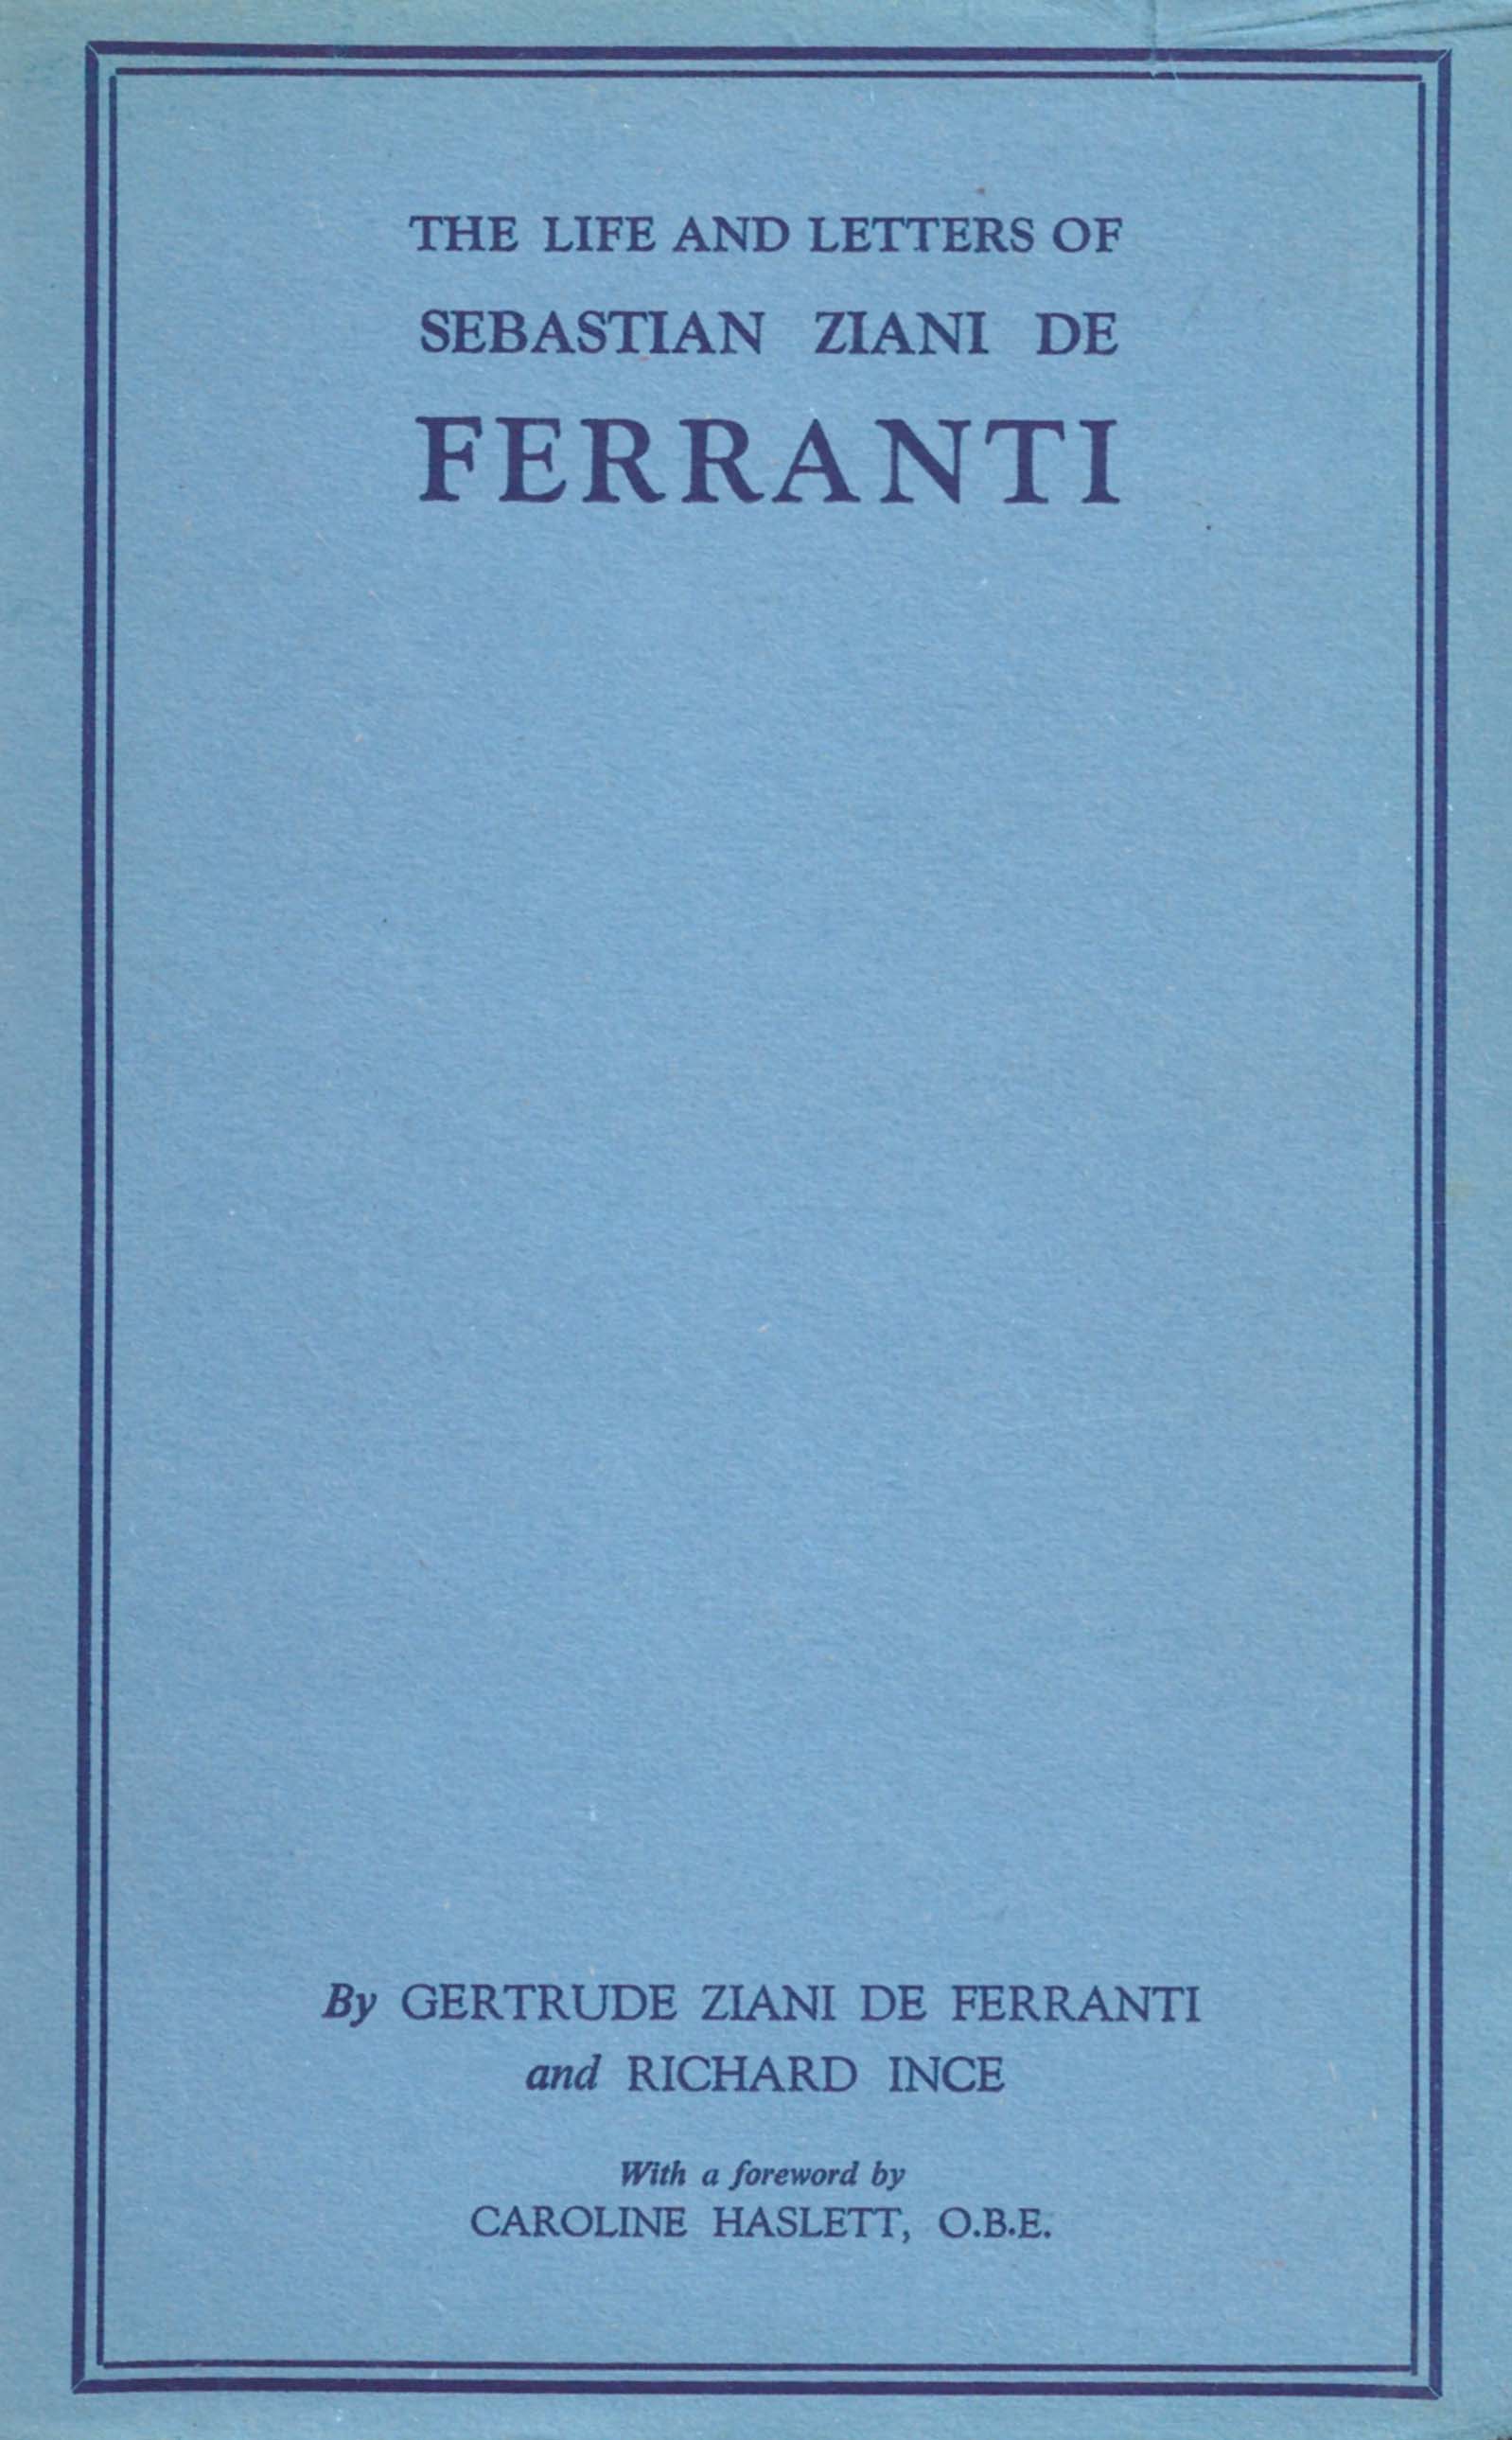 Dr Ferranti